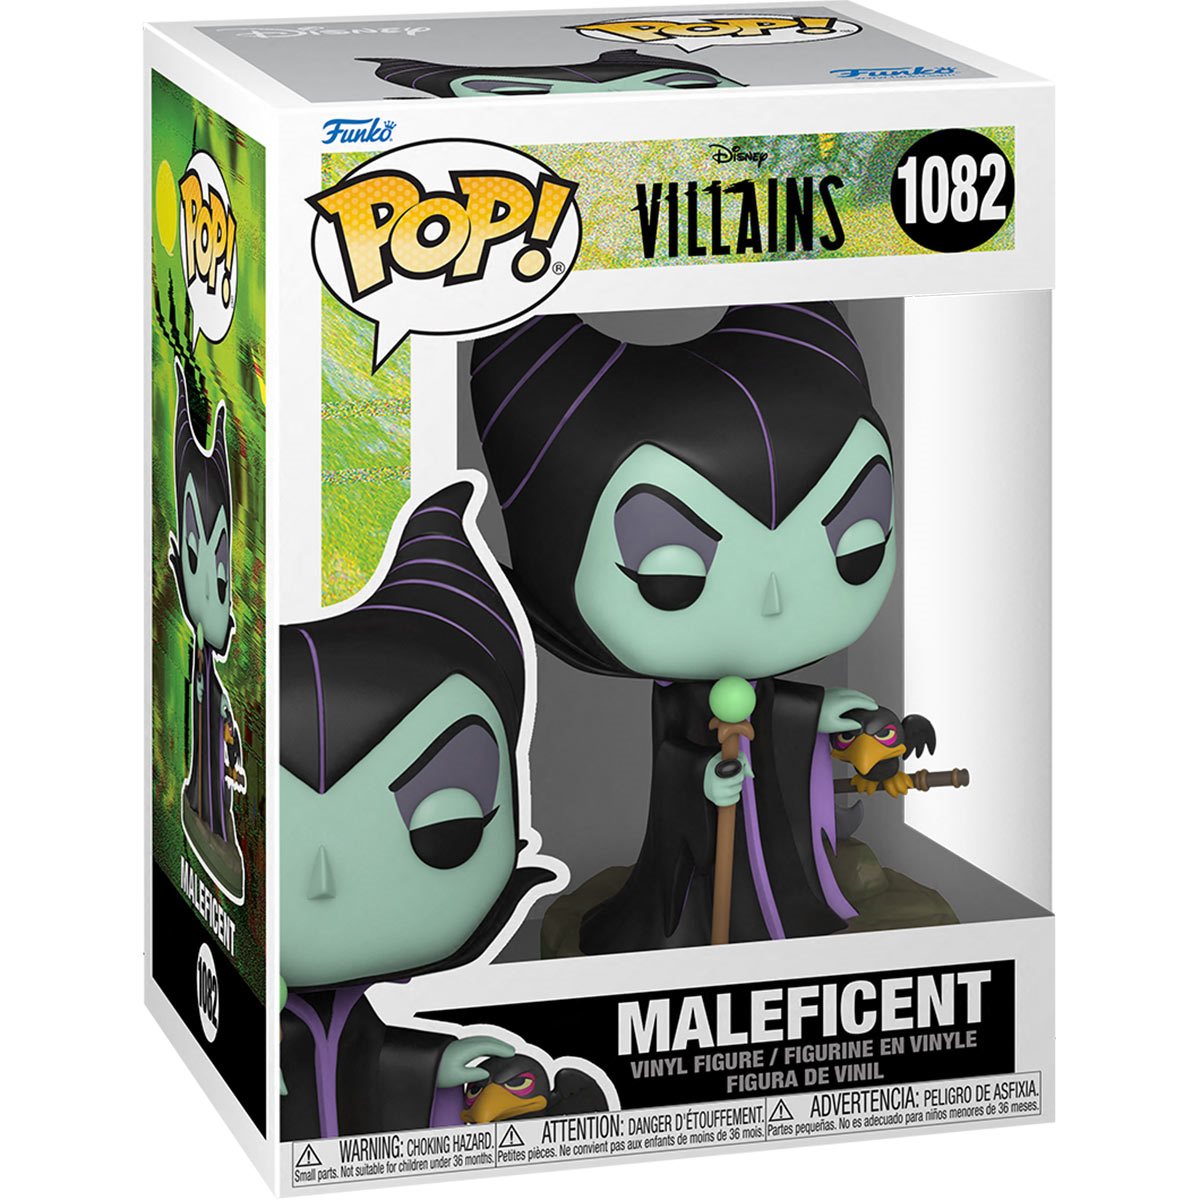 Maleficent Funko Pop! Disney Villains #1082 Vinyl FigureMaleficent Funko Pop! Disney Villains #1082 Vinyl Figure